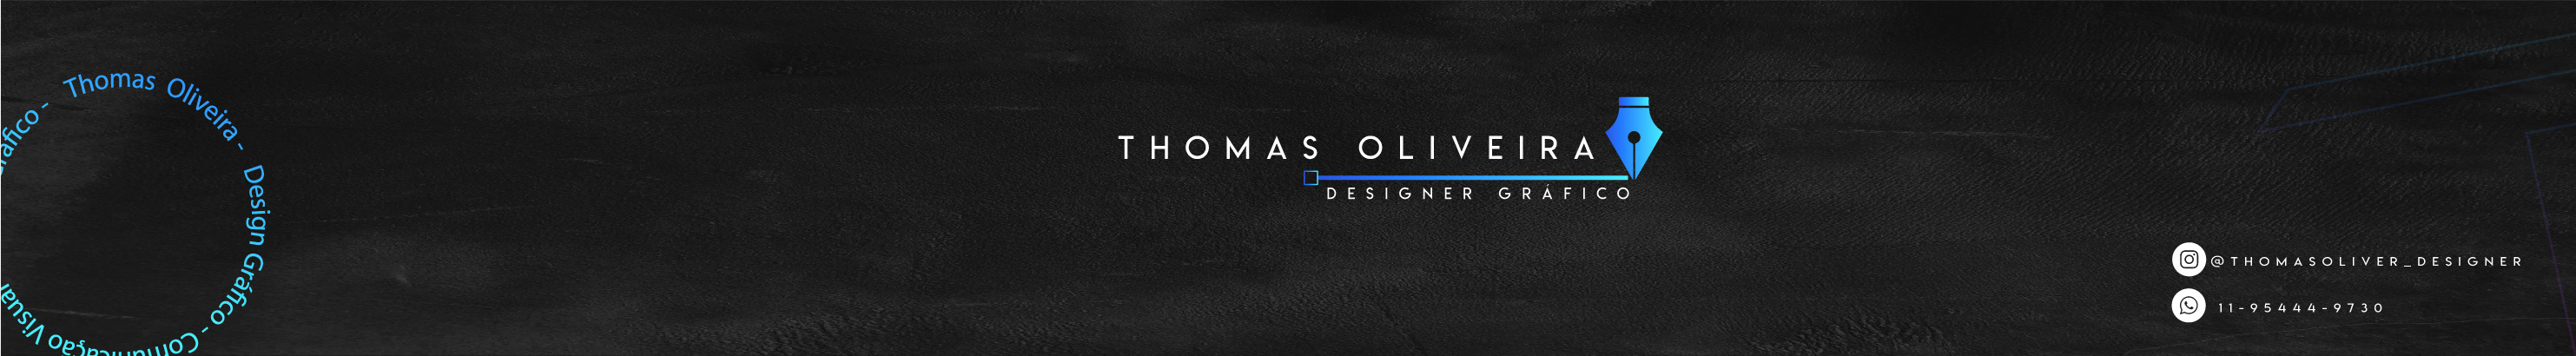 Thomas de Oliveira's profile banner